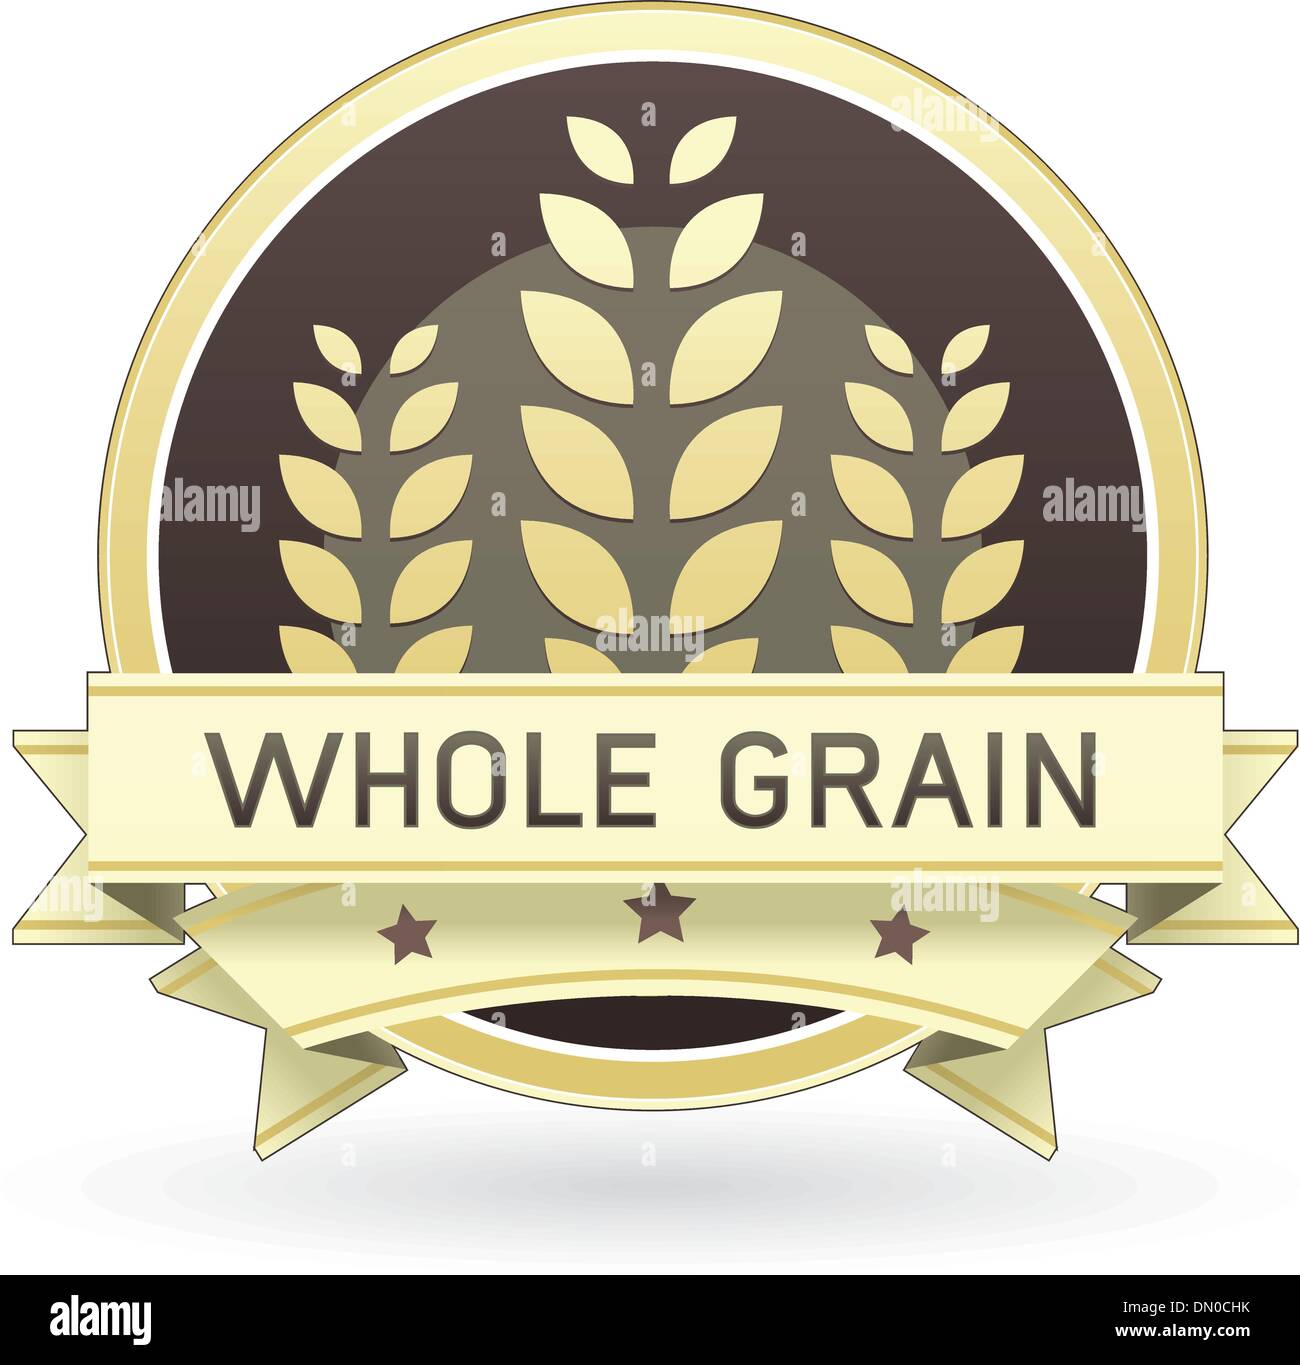 Whole grain food label Stock Vector